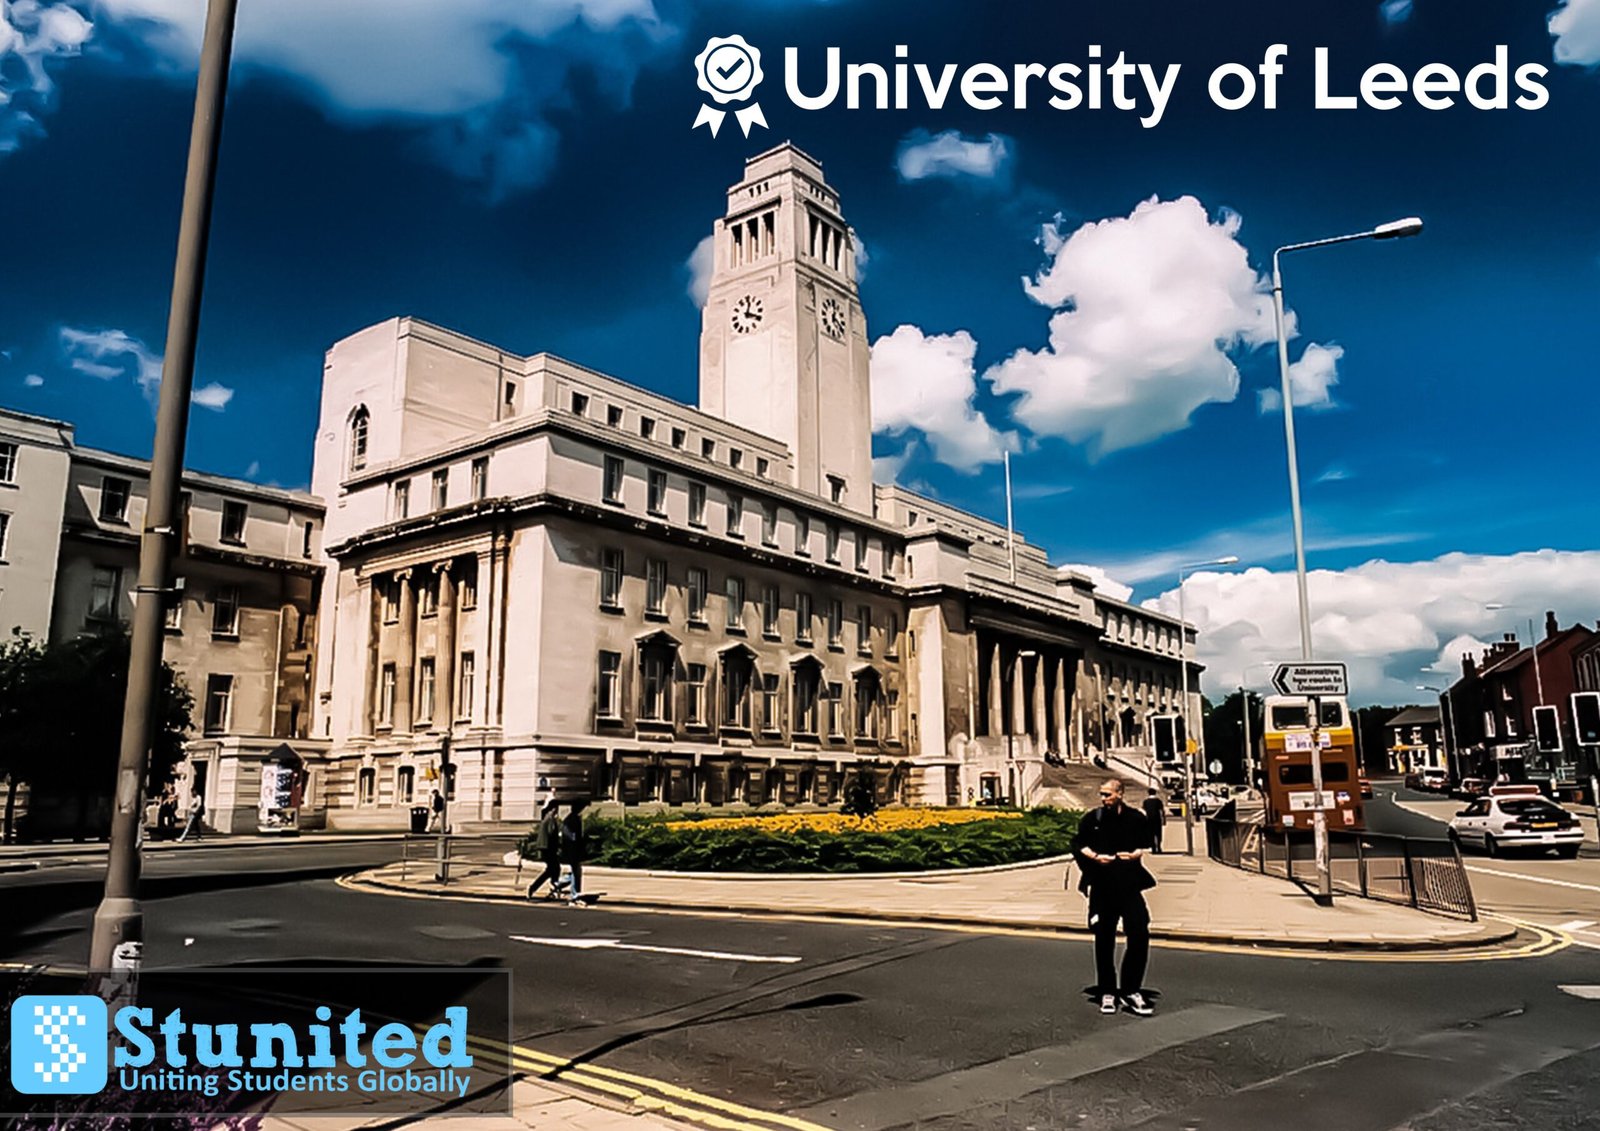 Stunited Internship jobs for University of Leeds.